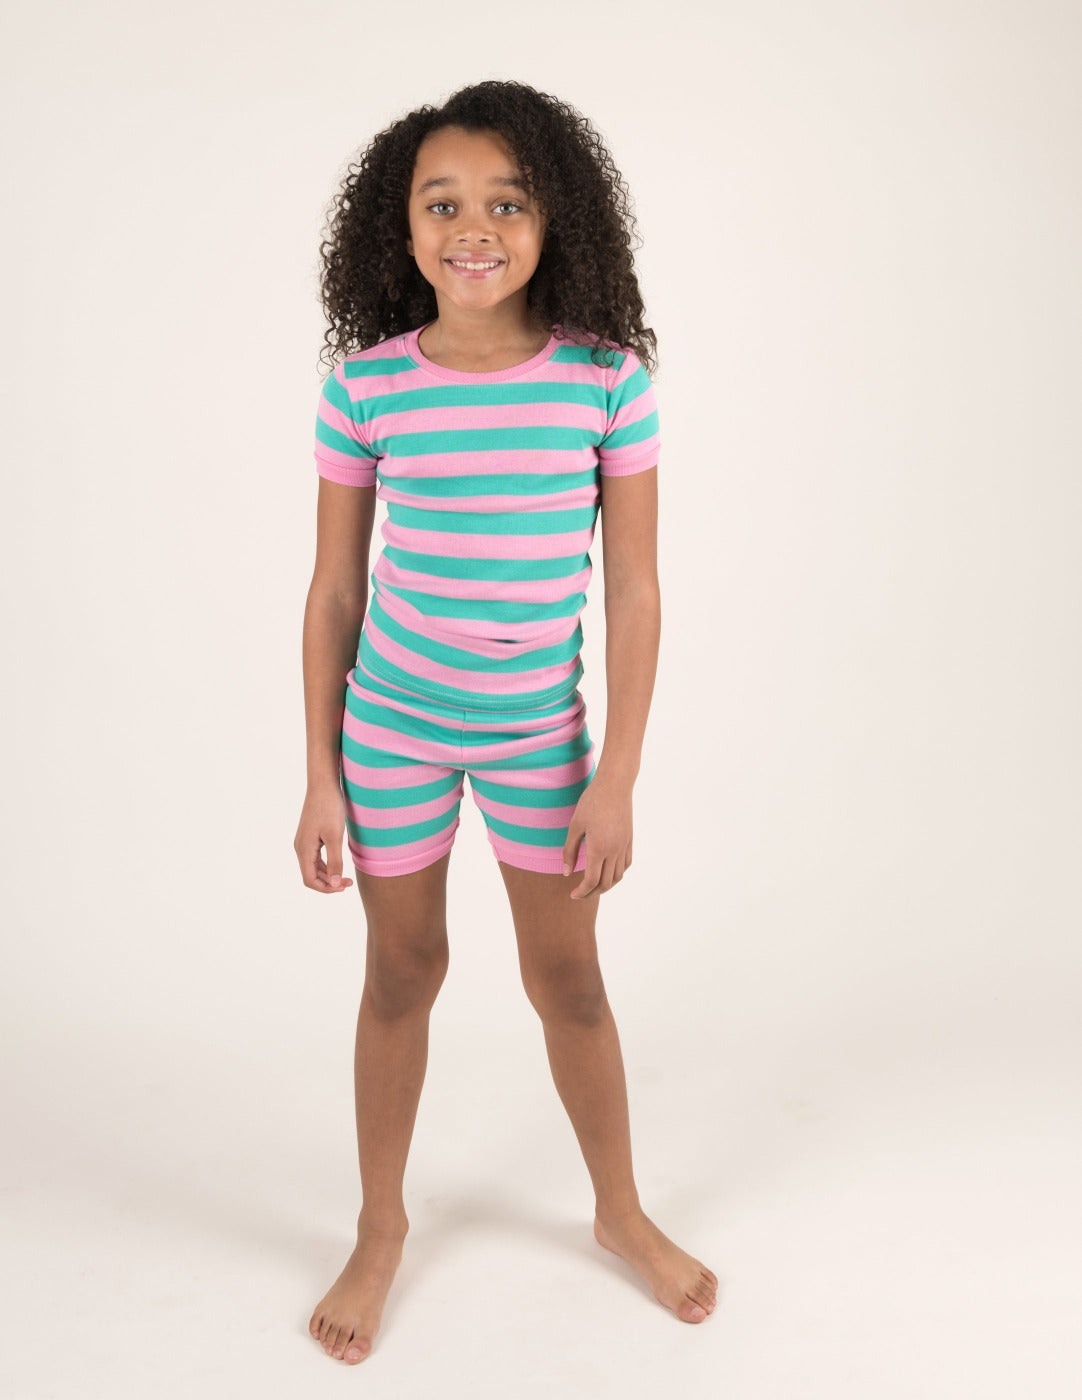 kids shorts aqua and pink striped pajamas